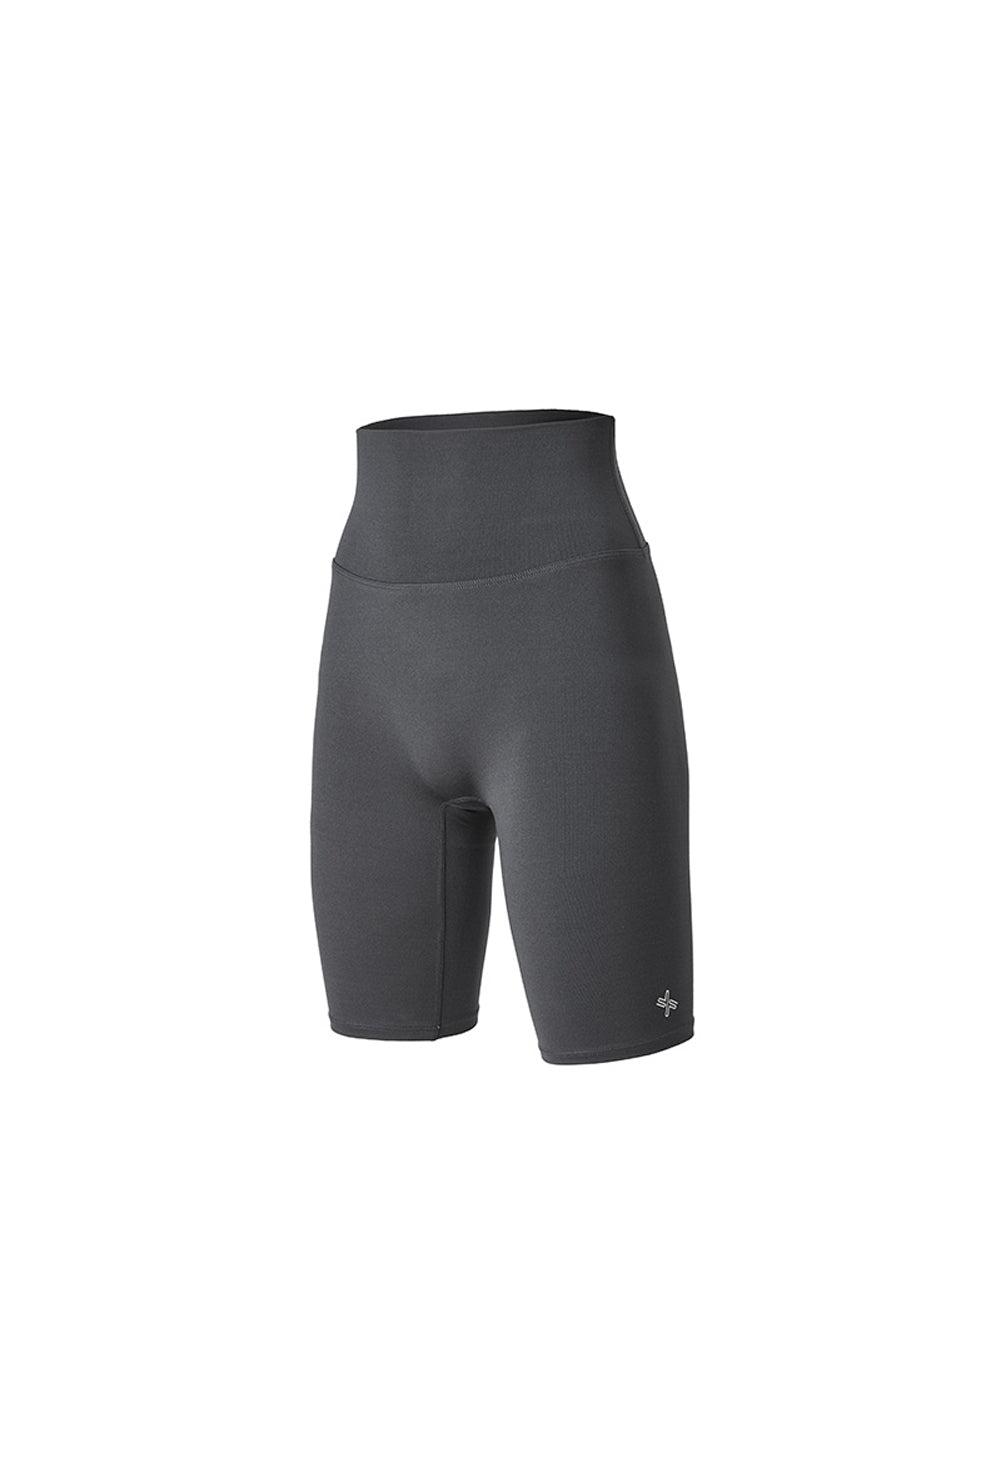 XELLA Intention 5 Biker Shorts - Magnet Gray